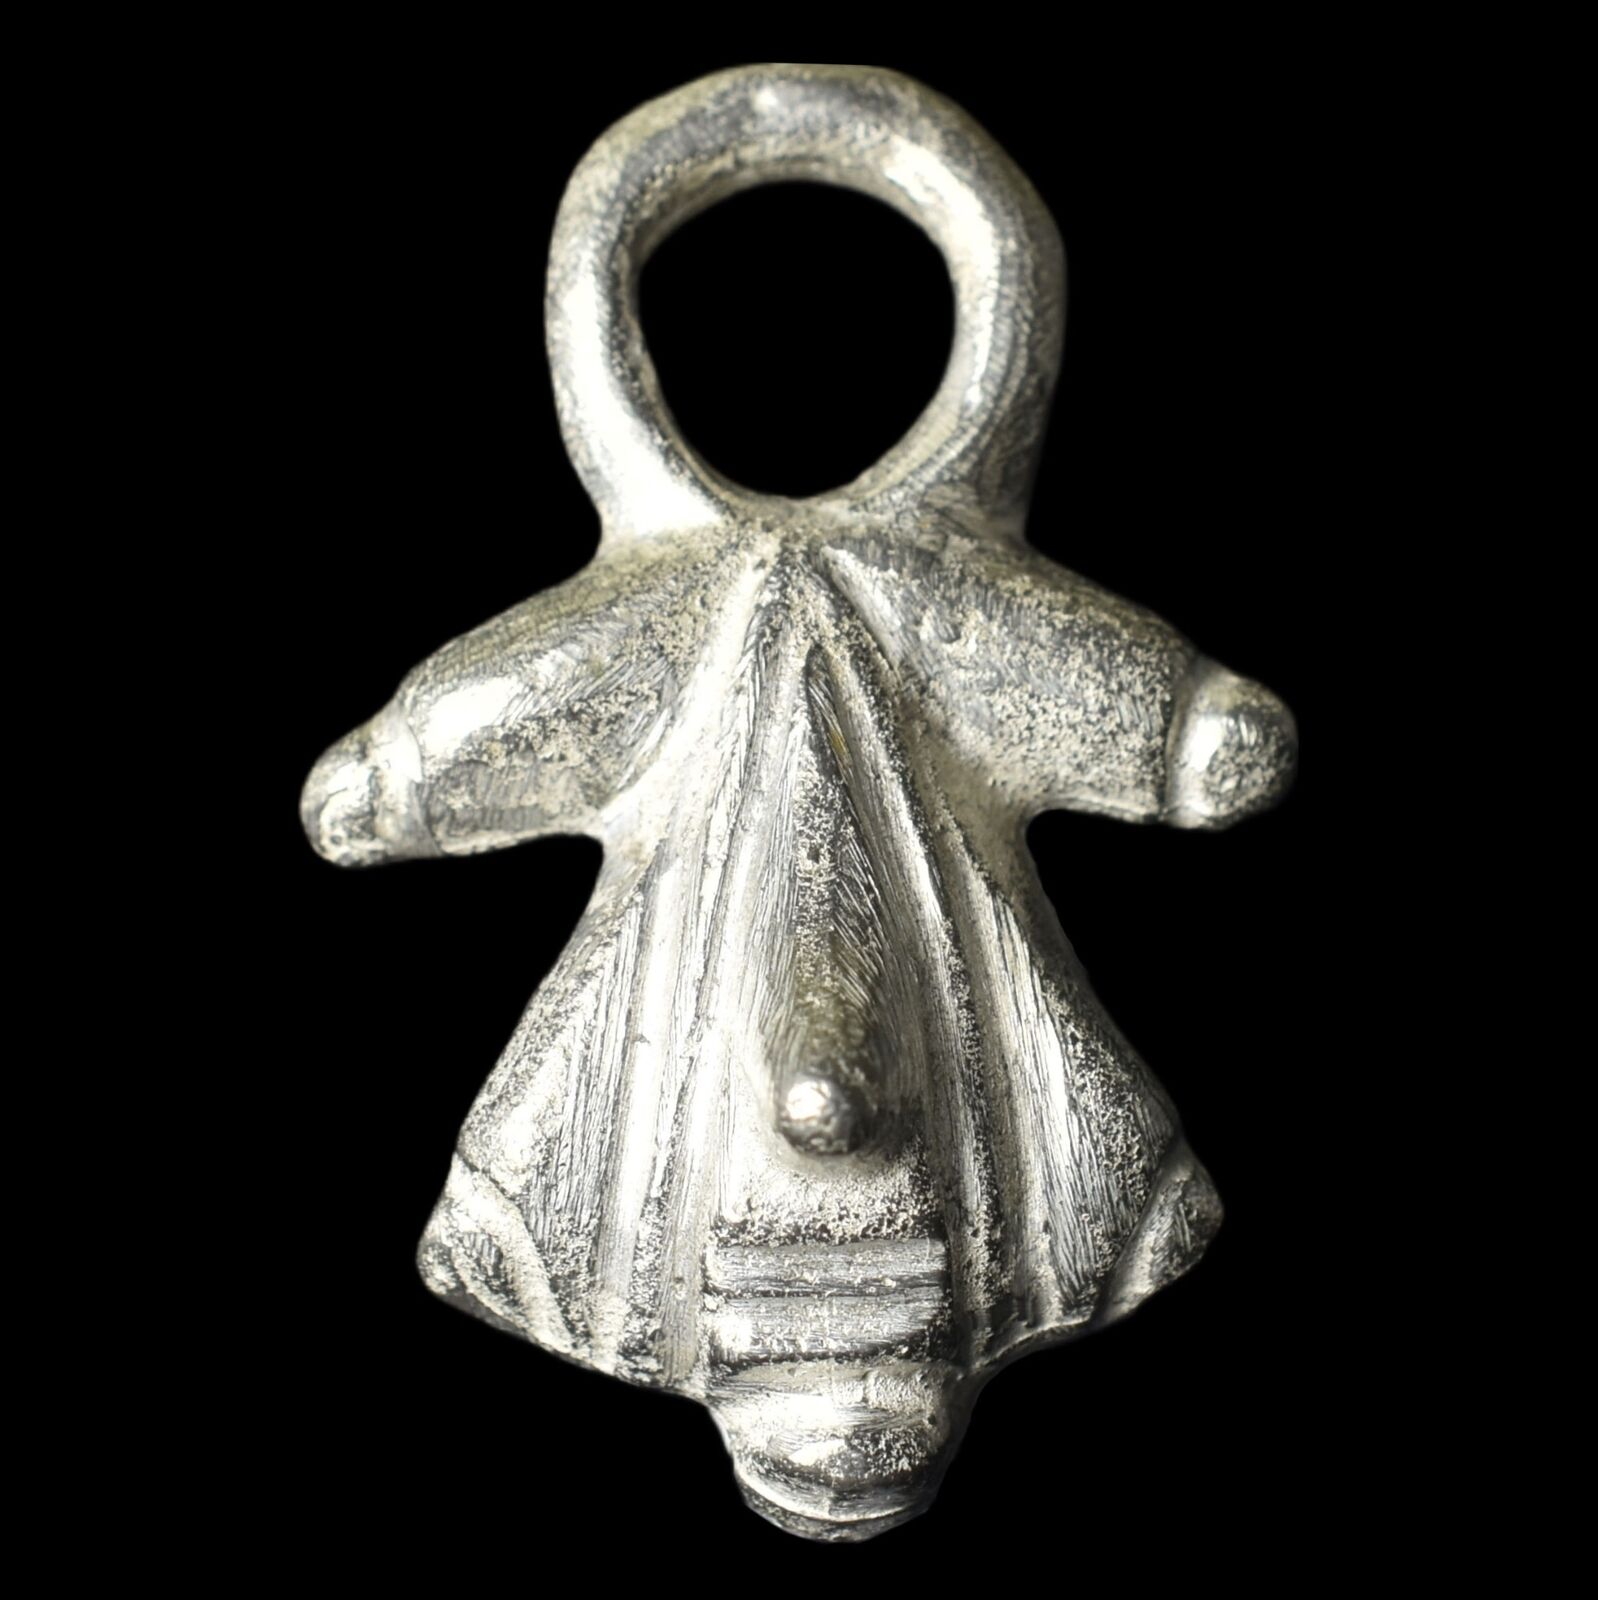 Fascinum Fascinus Small Sterling Silver Roman Phallic Pendant Charm Handmade